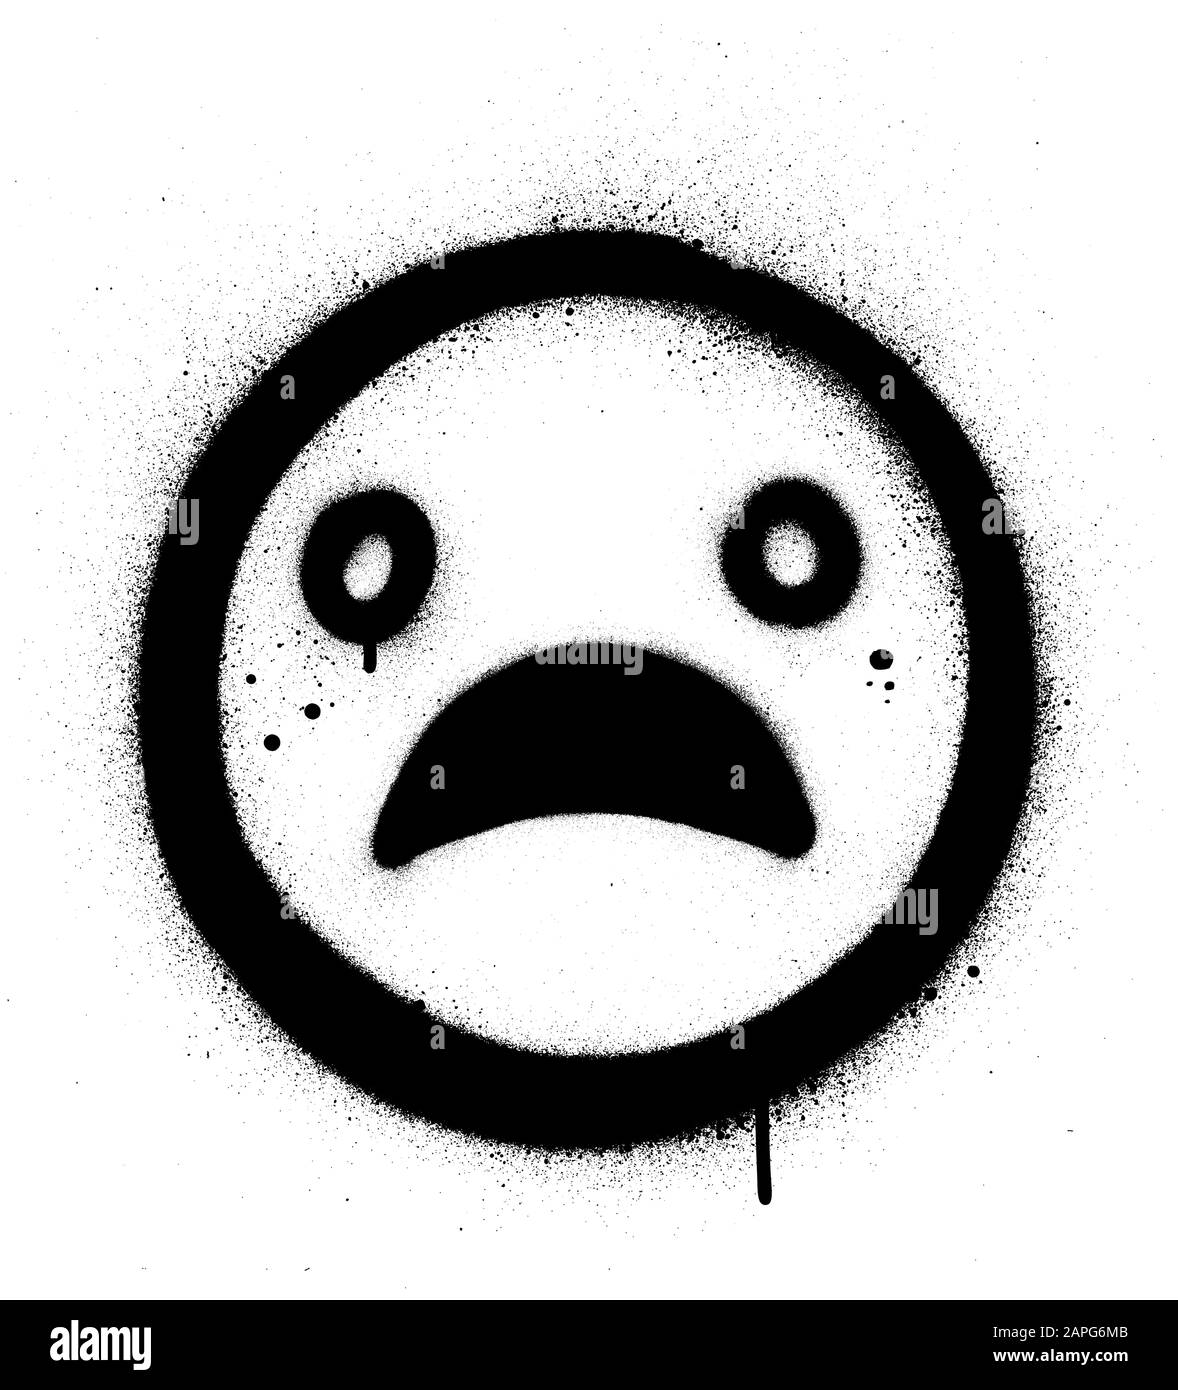 Graffiti Sad Face Icon Sprayed In Black Over White Stock Vector Image Art Alamy